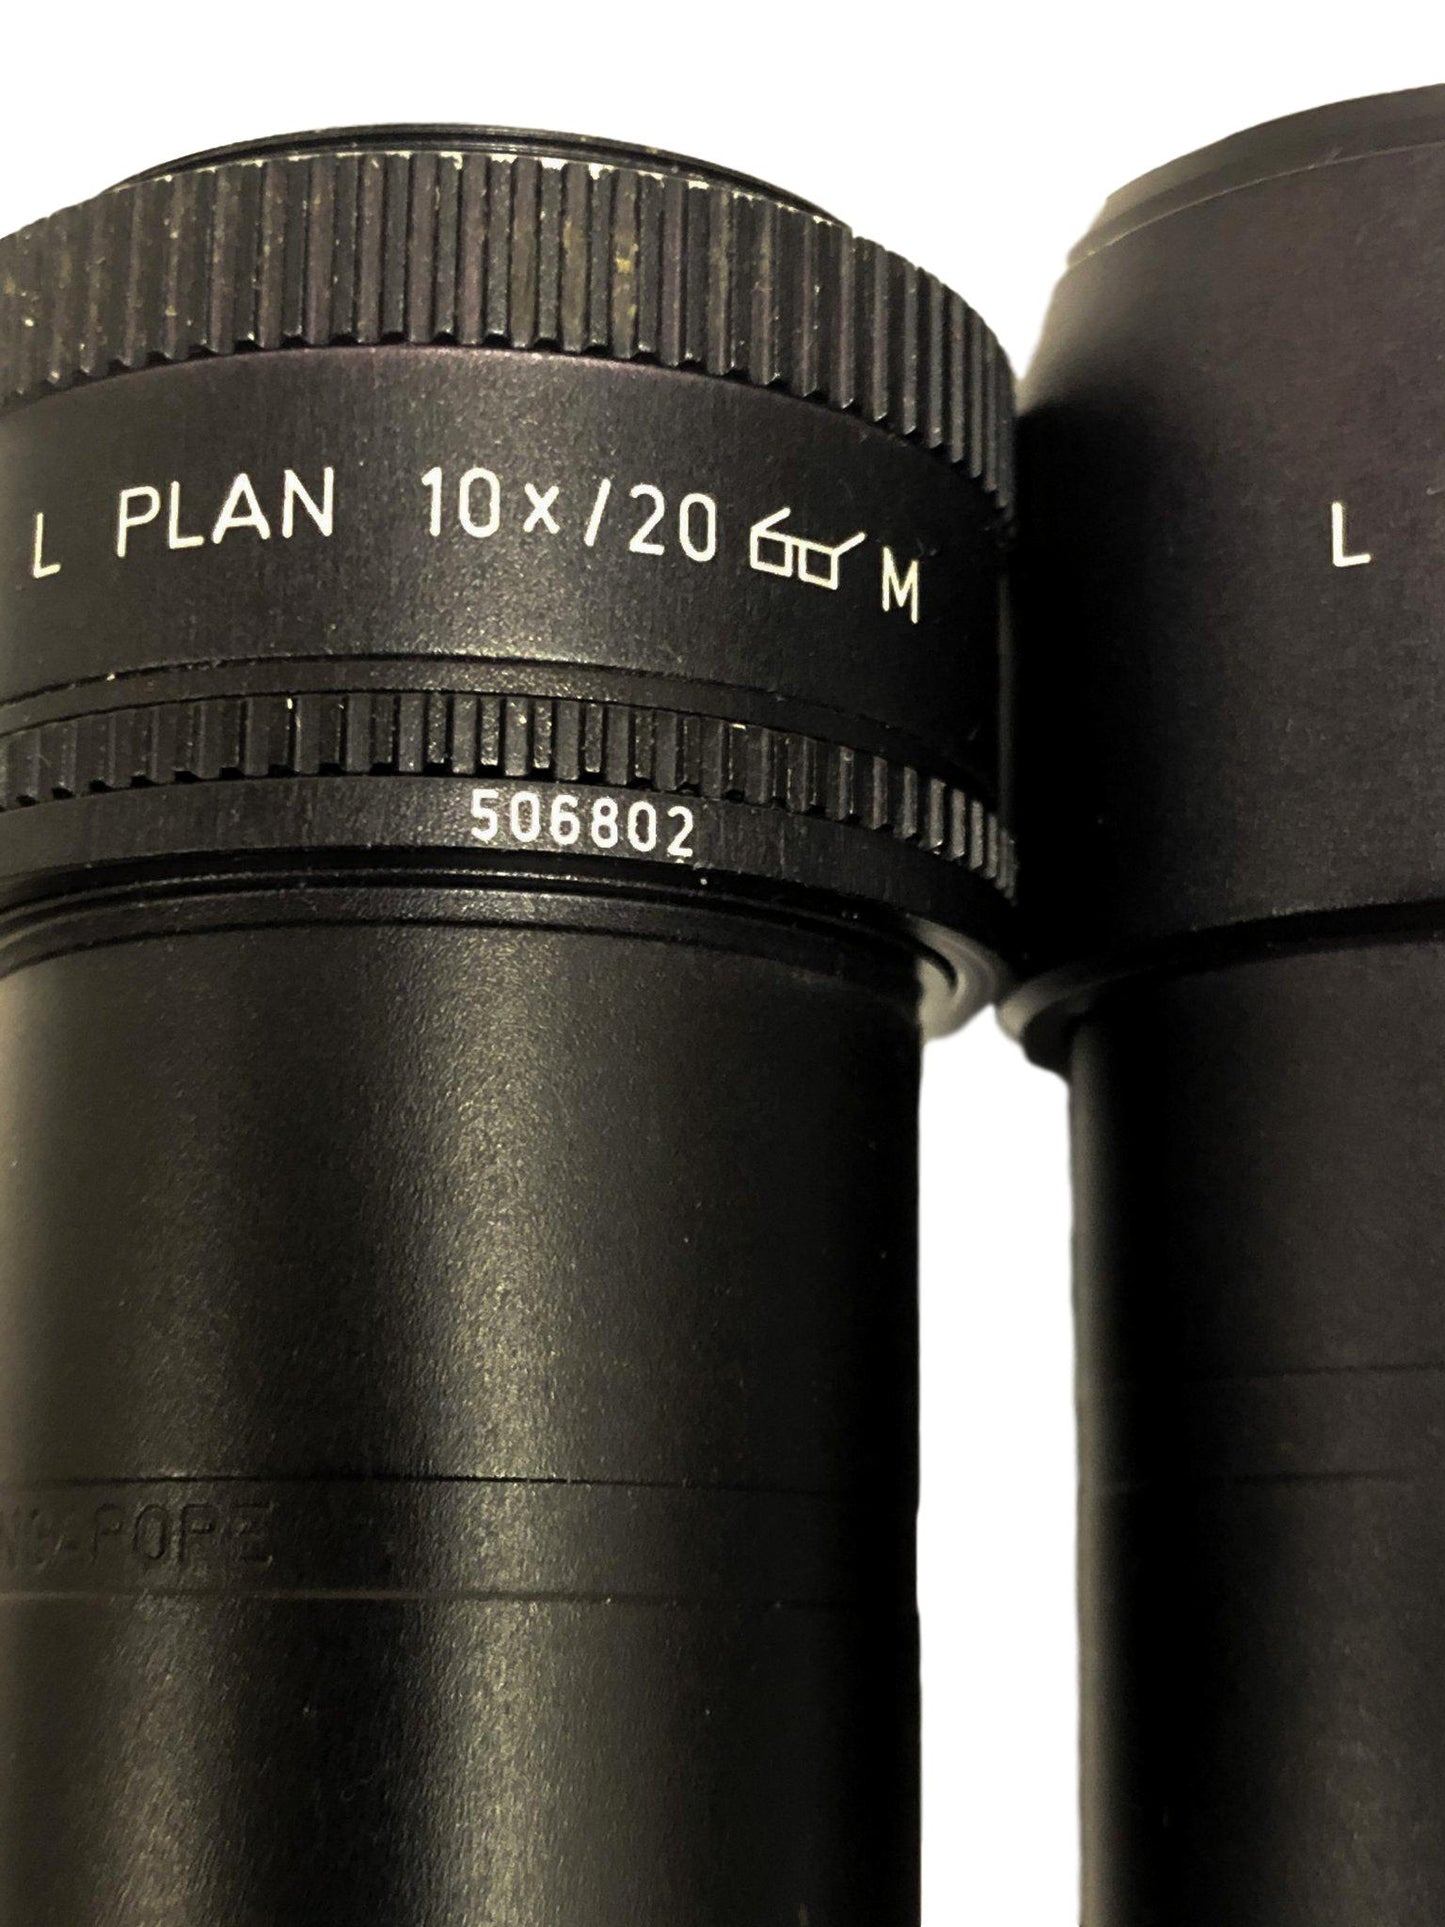 Leica L Plan Eyepieces 10x / 20 - 506802 & 506809